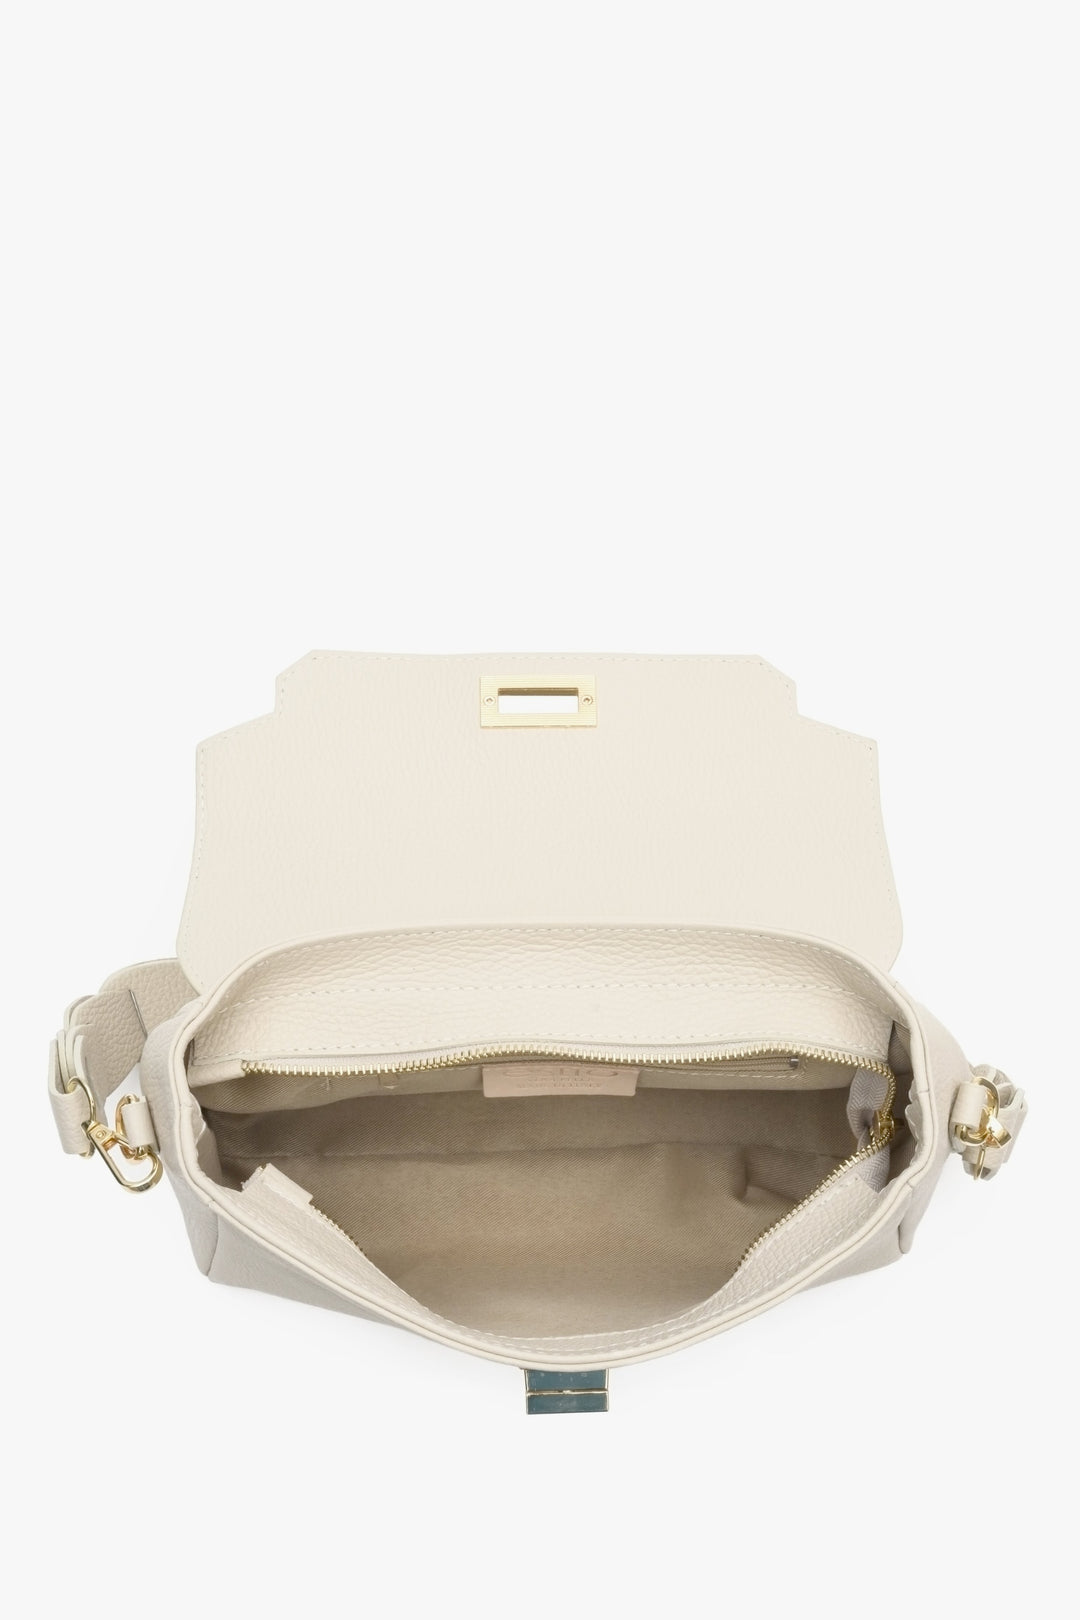 Women's light beige shoulder bag made of Italian leather - lining.